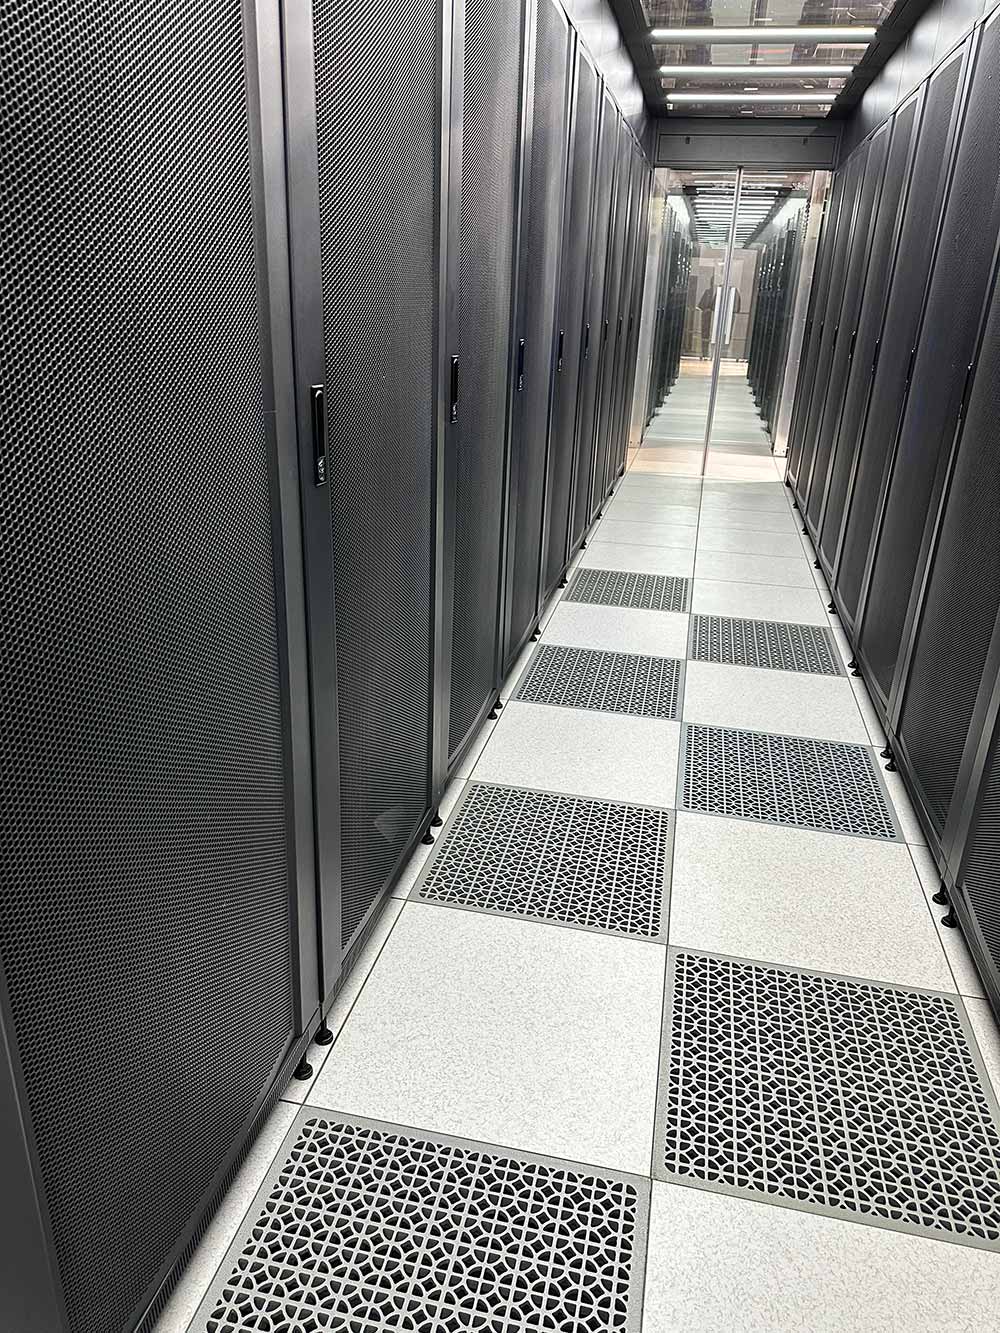 Canadian Dedicated Servers Datacenter